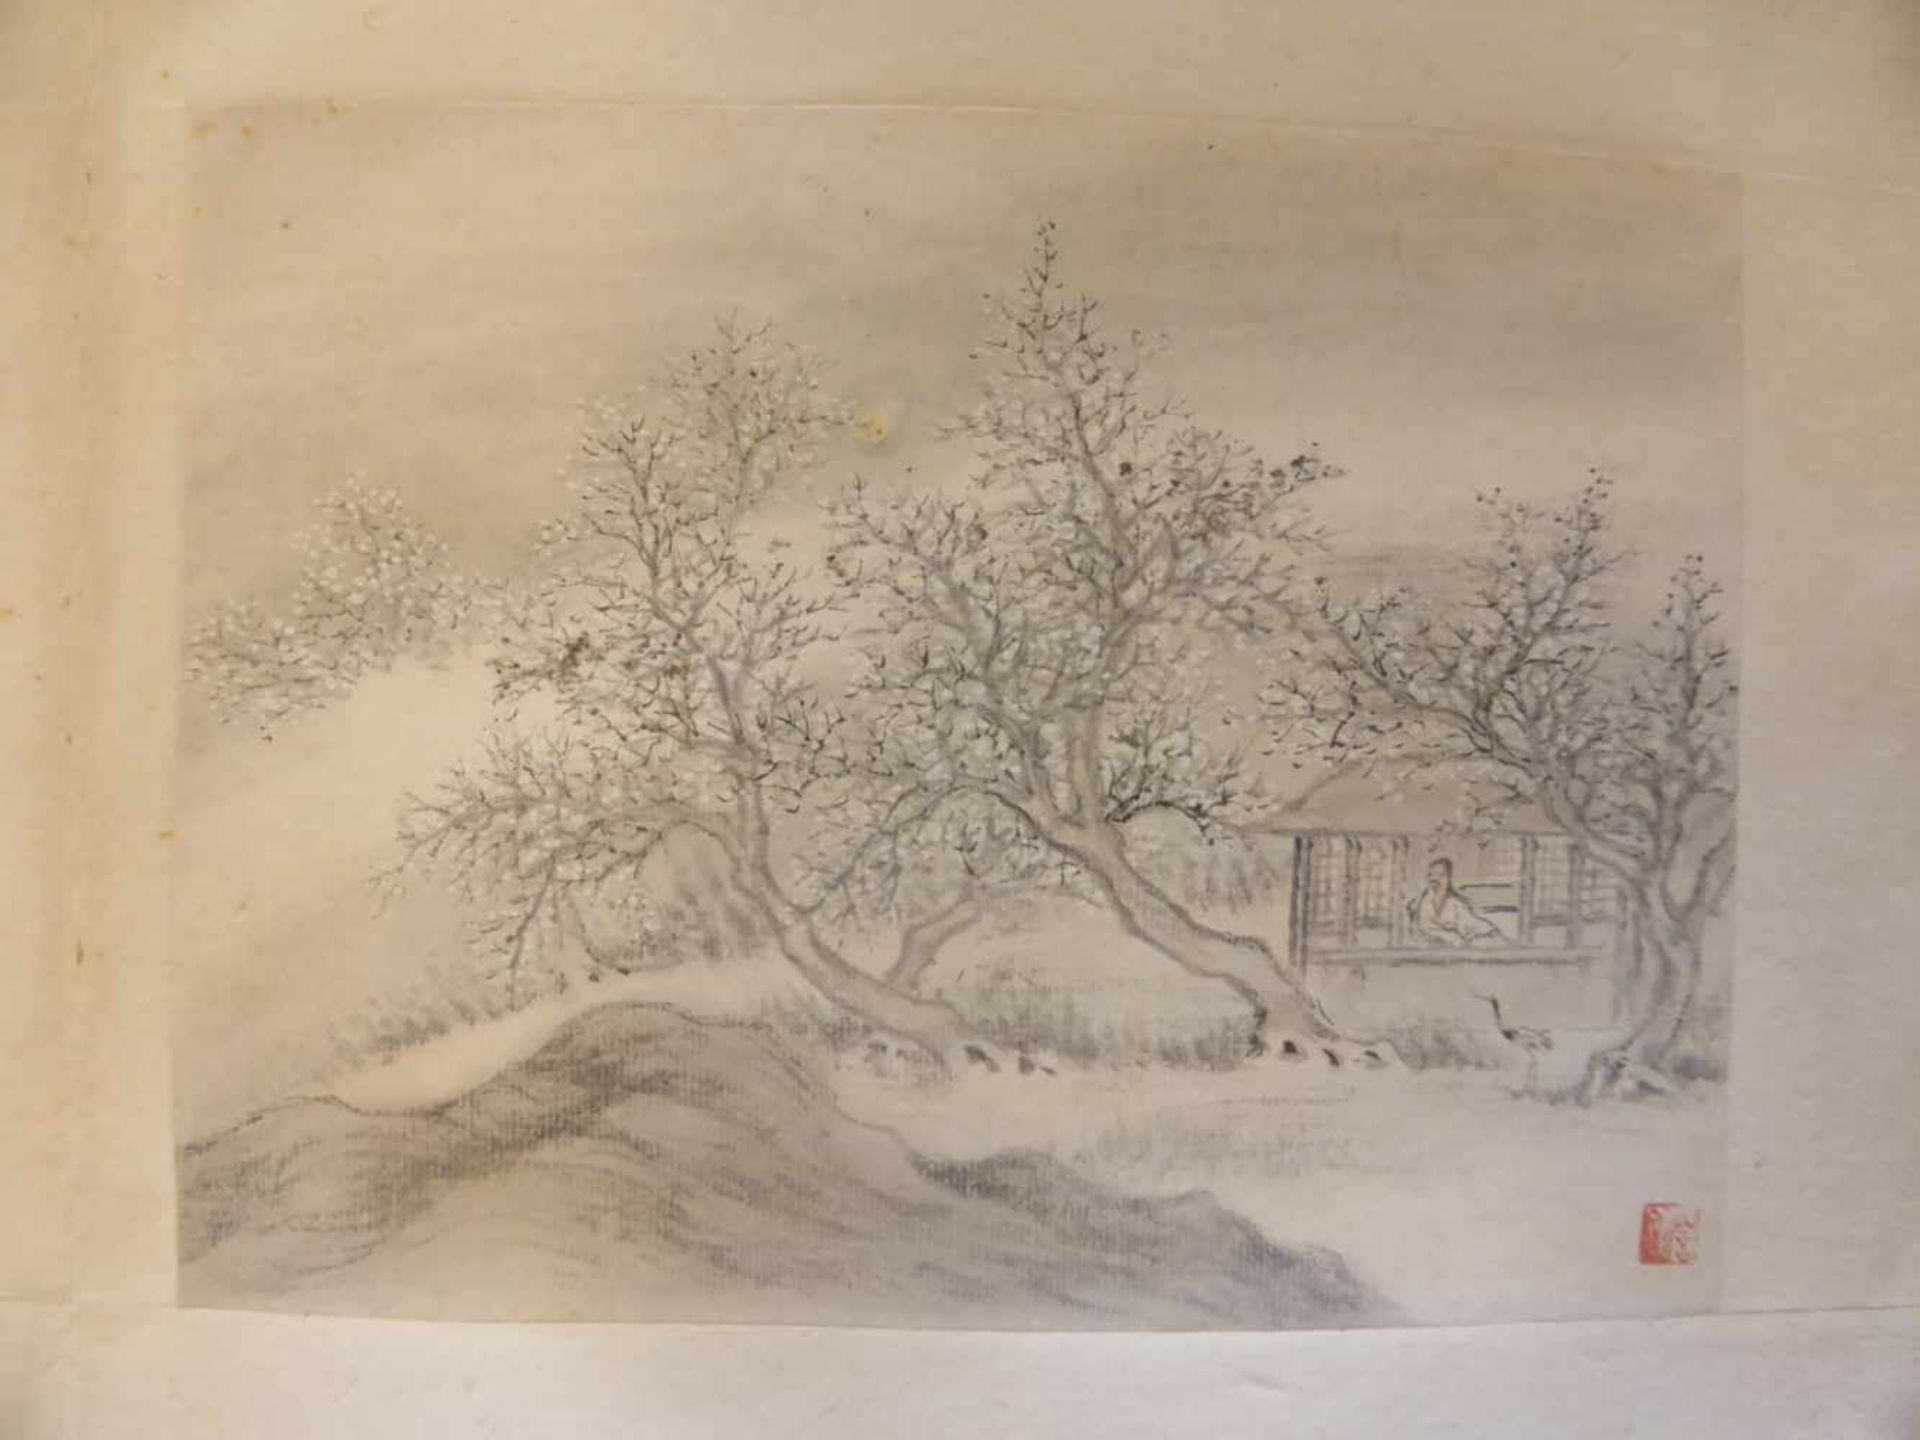 LI, YANKUI1840 - 1913. Water and mountain landscapes. China. Qing dynasty. 19th c. Leporello - Bild 4 aus 13